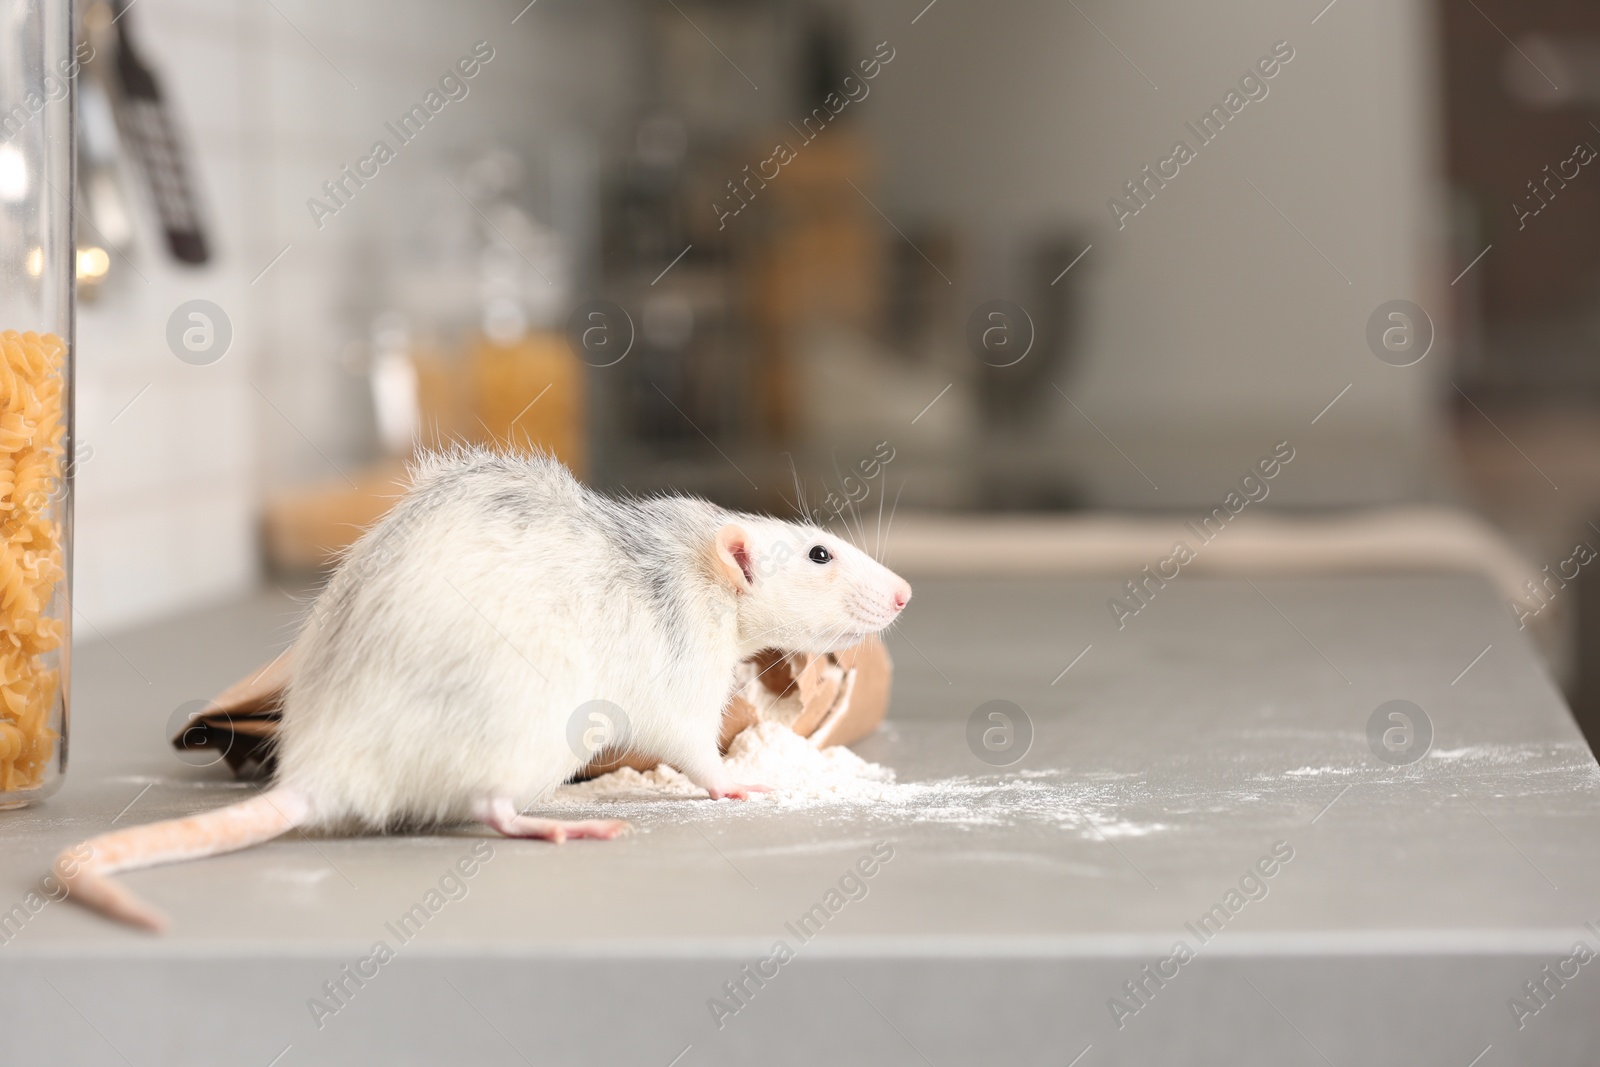 Photo of Rat near bag of flour on kitchen counter. Household pest